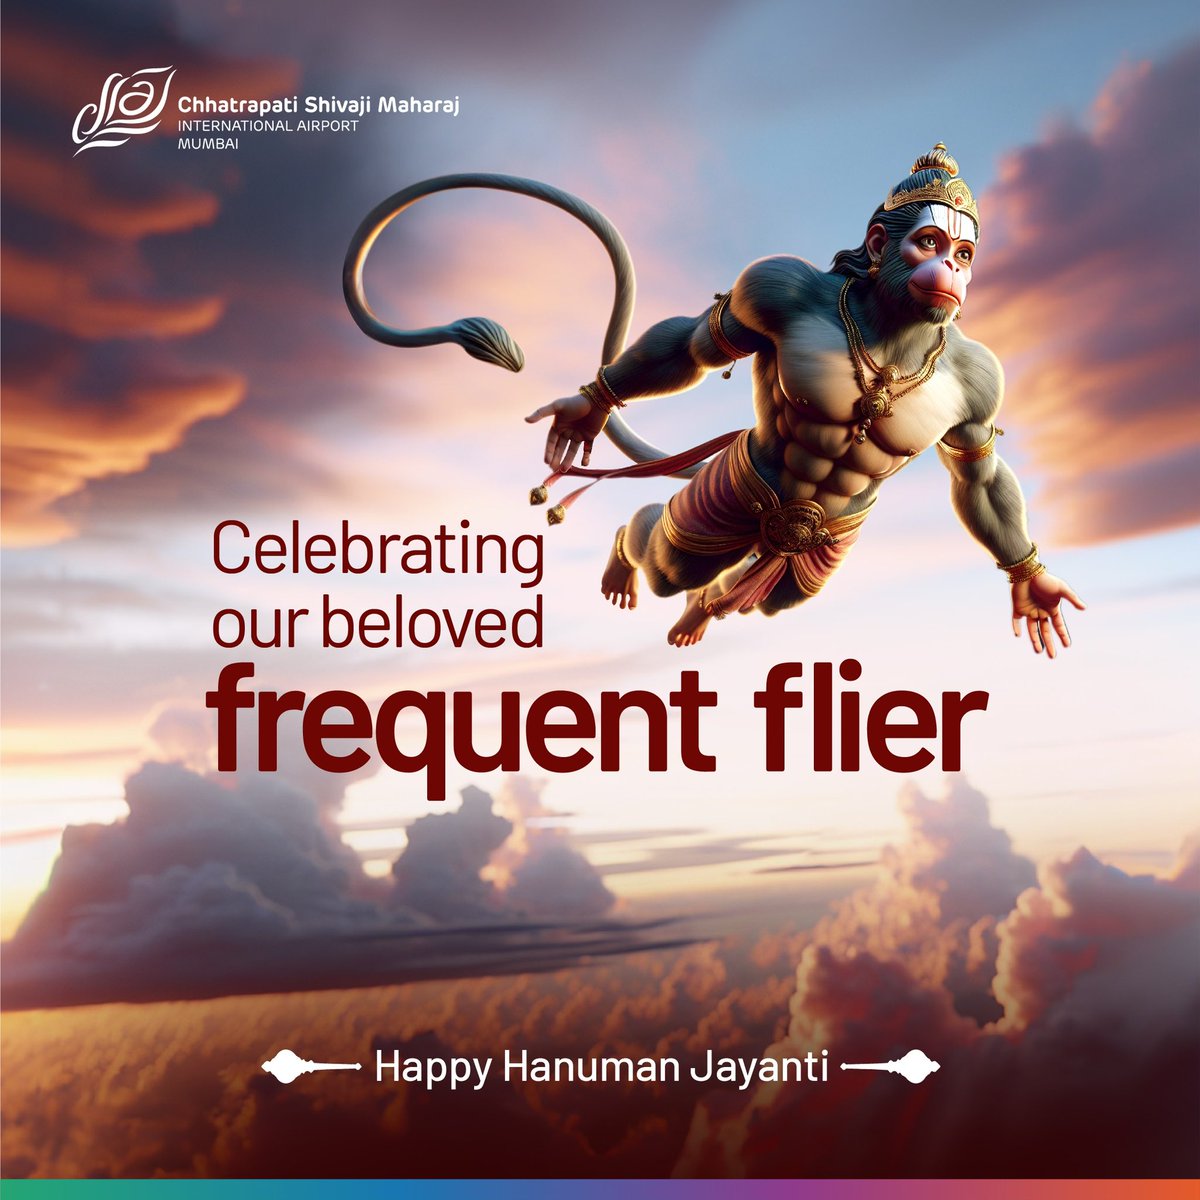 Empower your journey with divine guidance on this auspicious day. Wishing you sky high success and happiness. Happy Hanuman Jayanti! #MumbaiAirport #CSMIA #GatewayToGoodness #HanumanJayanti #Blessings #Journey #Airport